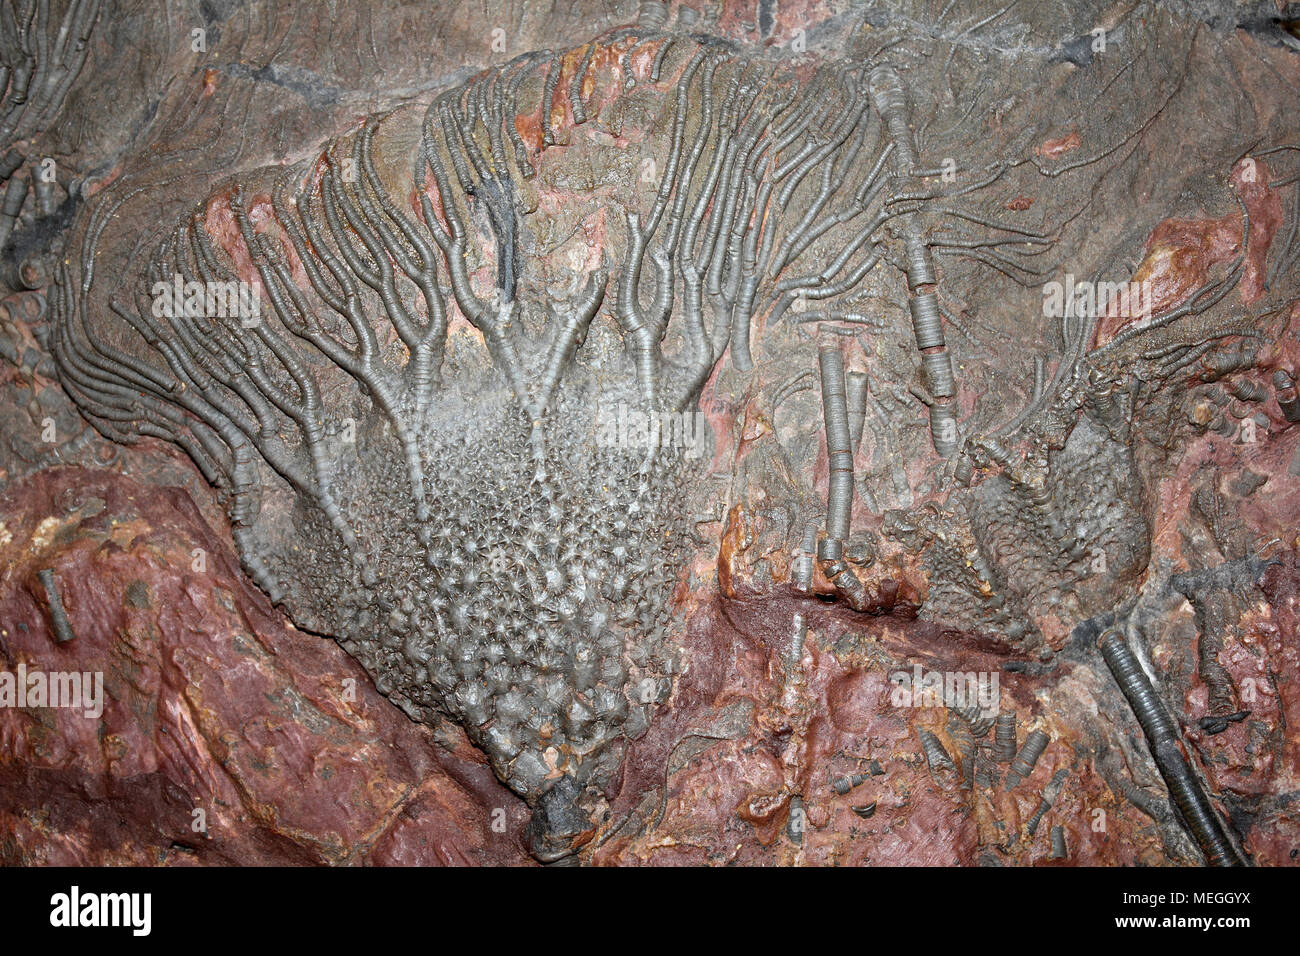 Fossile Crinoiden Scyphocrinites elegans, Silur Marokko Stockfoto